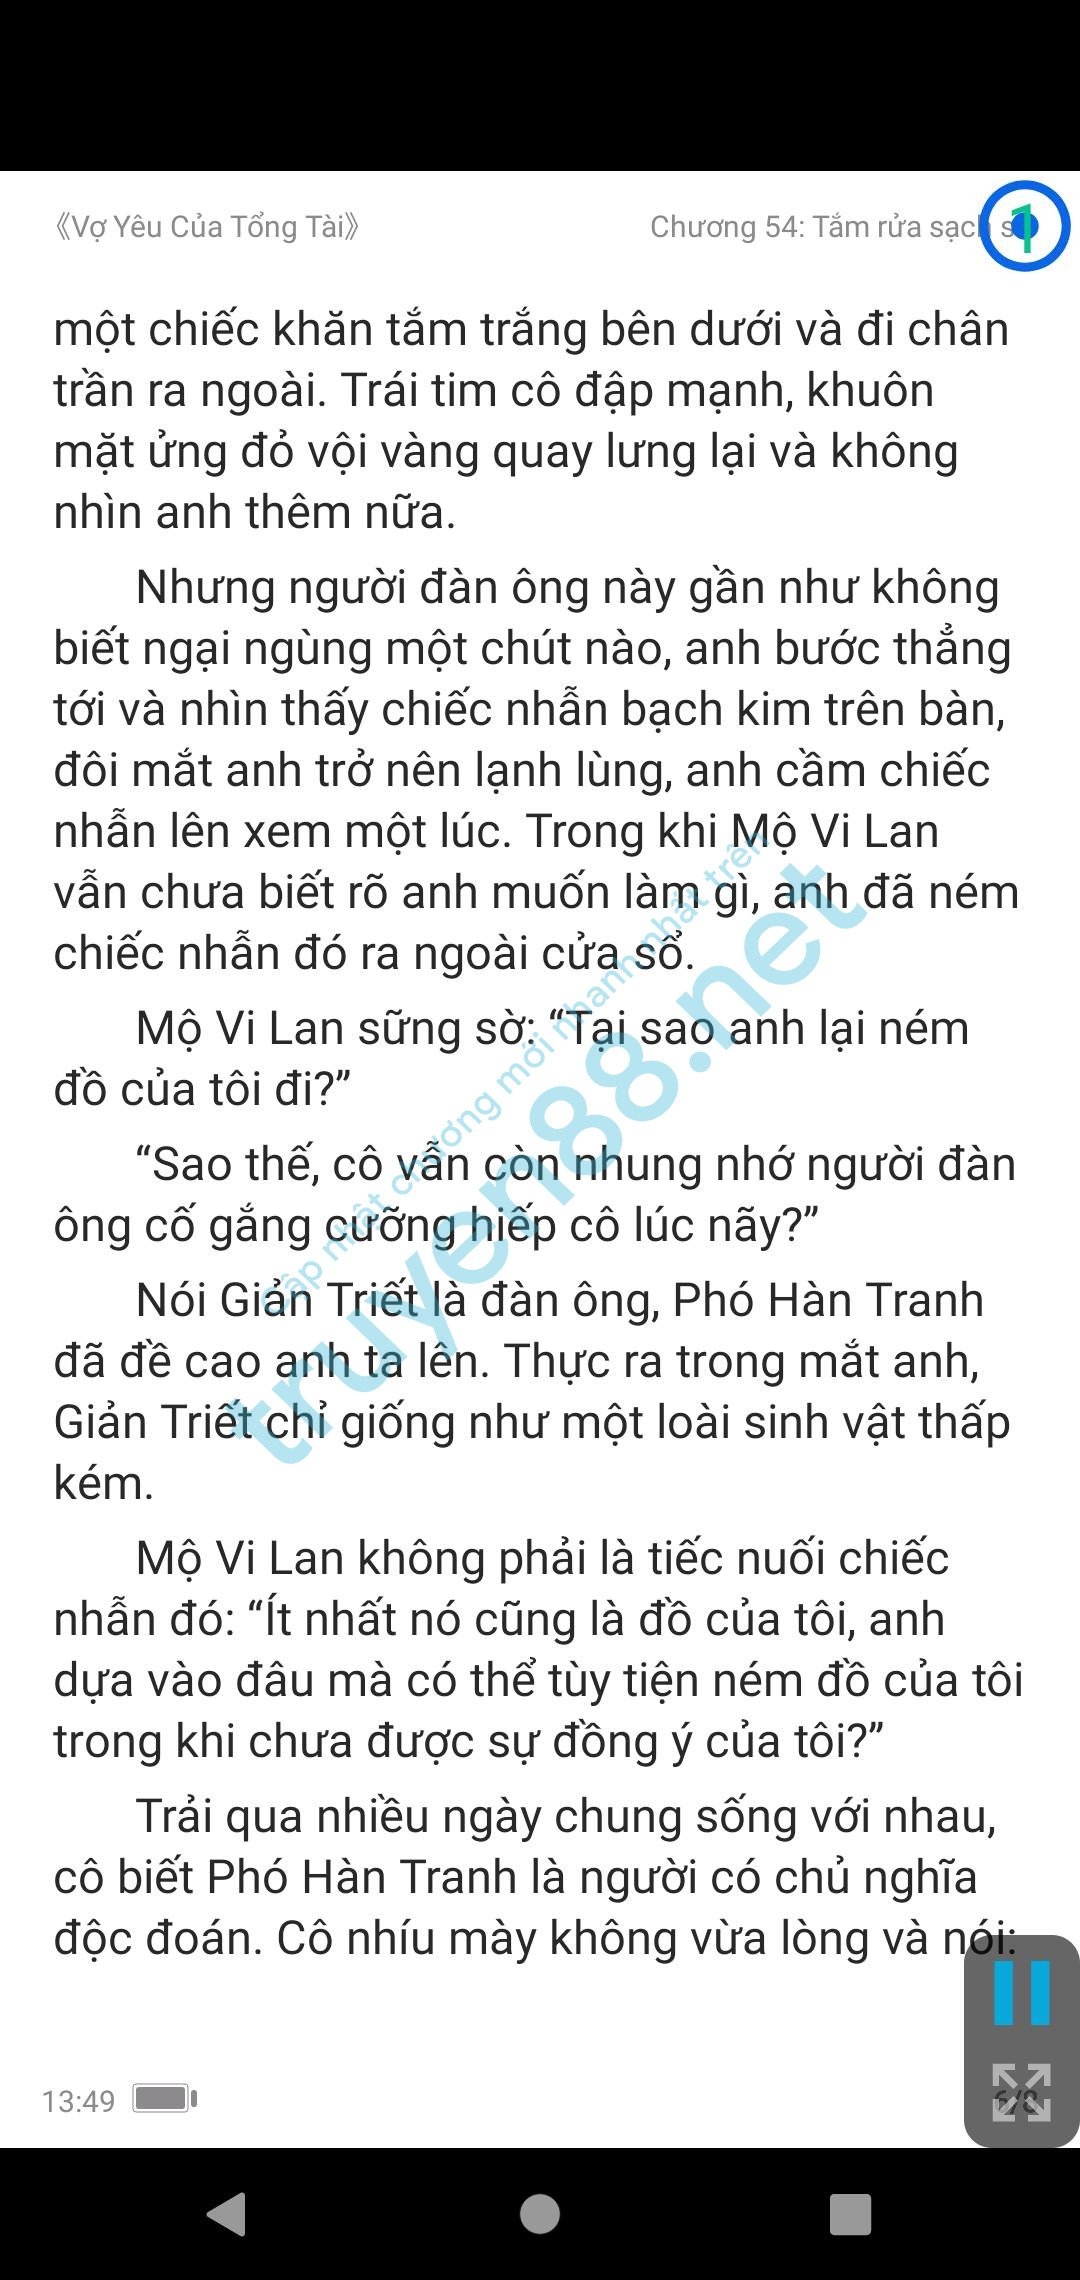 vo-yeu-cua-tong-tai-mo-vi-lan--pho-han-tranh-54-0